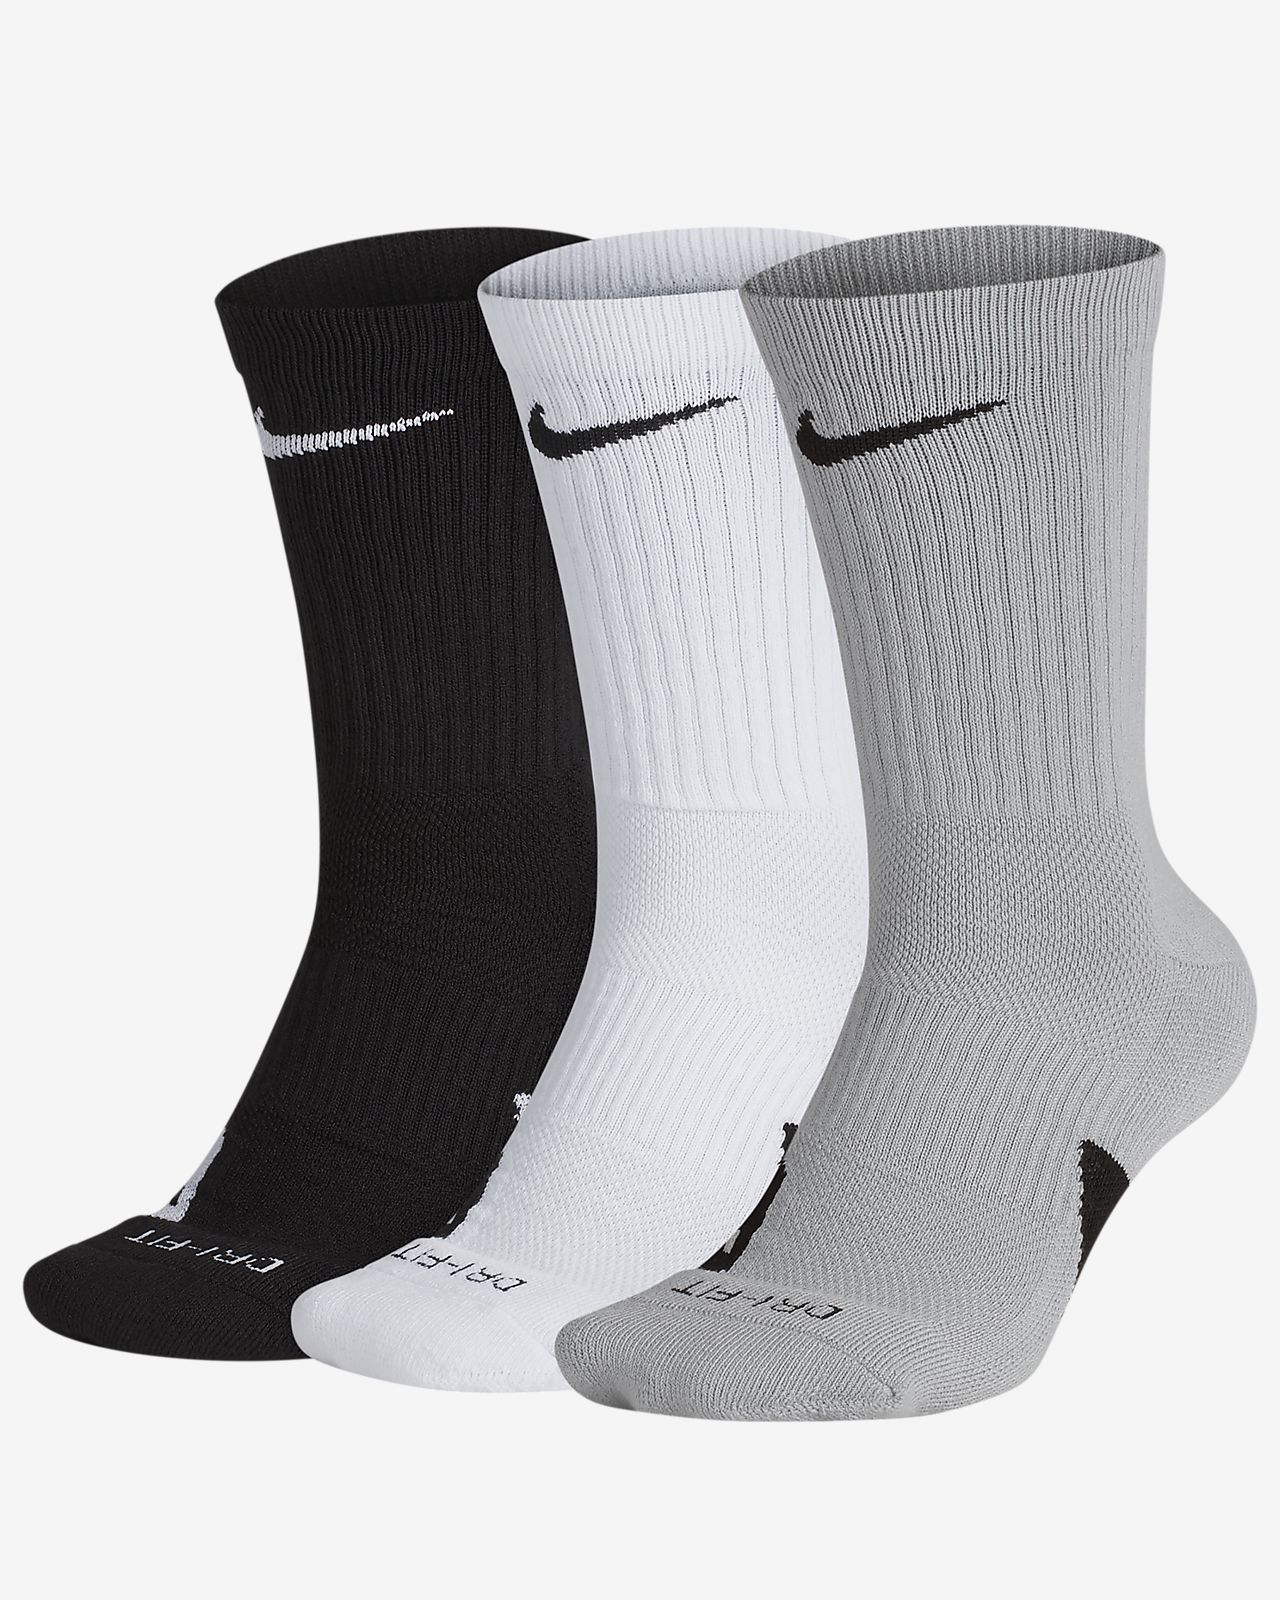 Nike Elite Crew Basketball Socks (3 